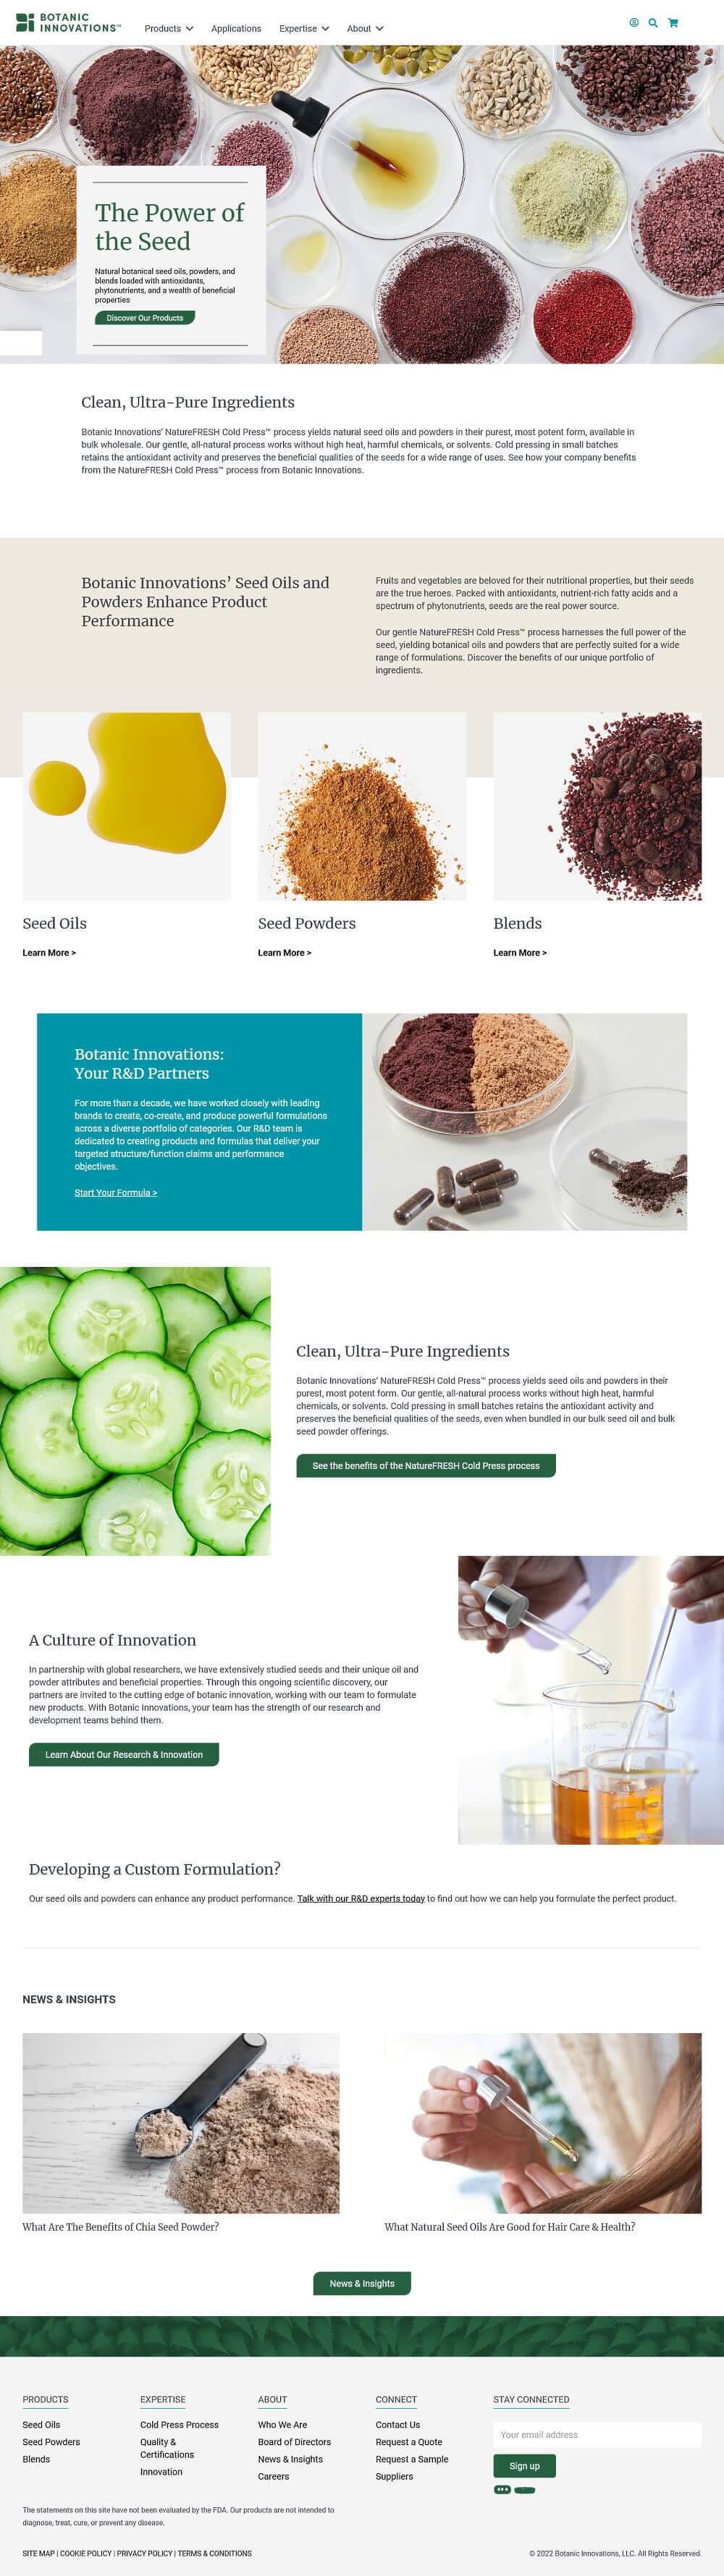 Botanic Innovations - GEEK, with a personality - WordPress Website Design Minneapolis, MN